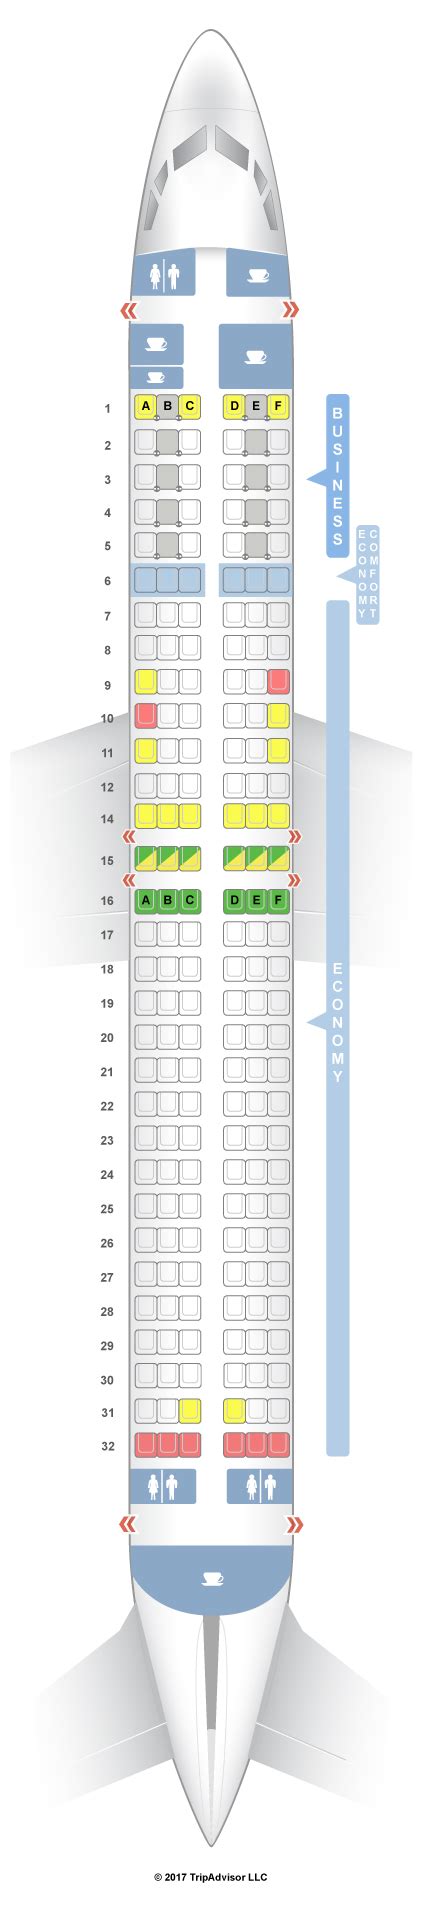 Seatguru Seat Map Klm Boeing 737 800 738